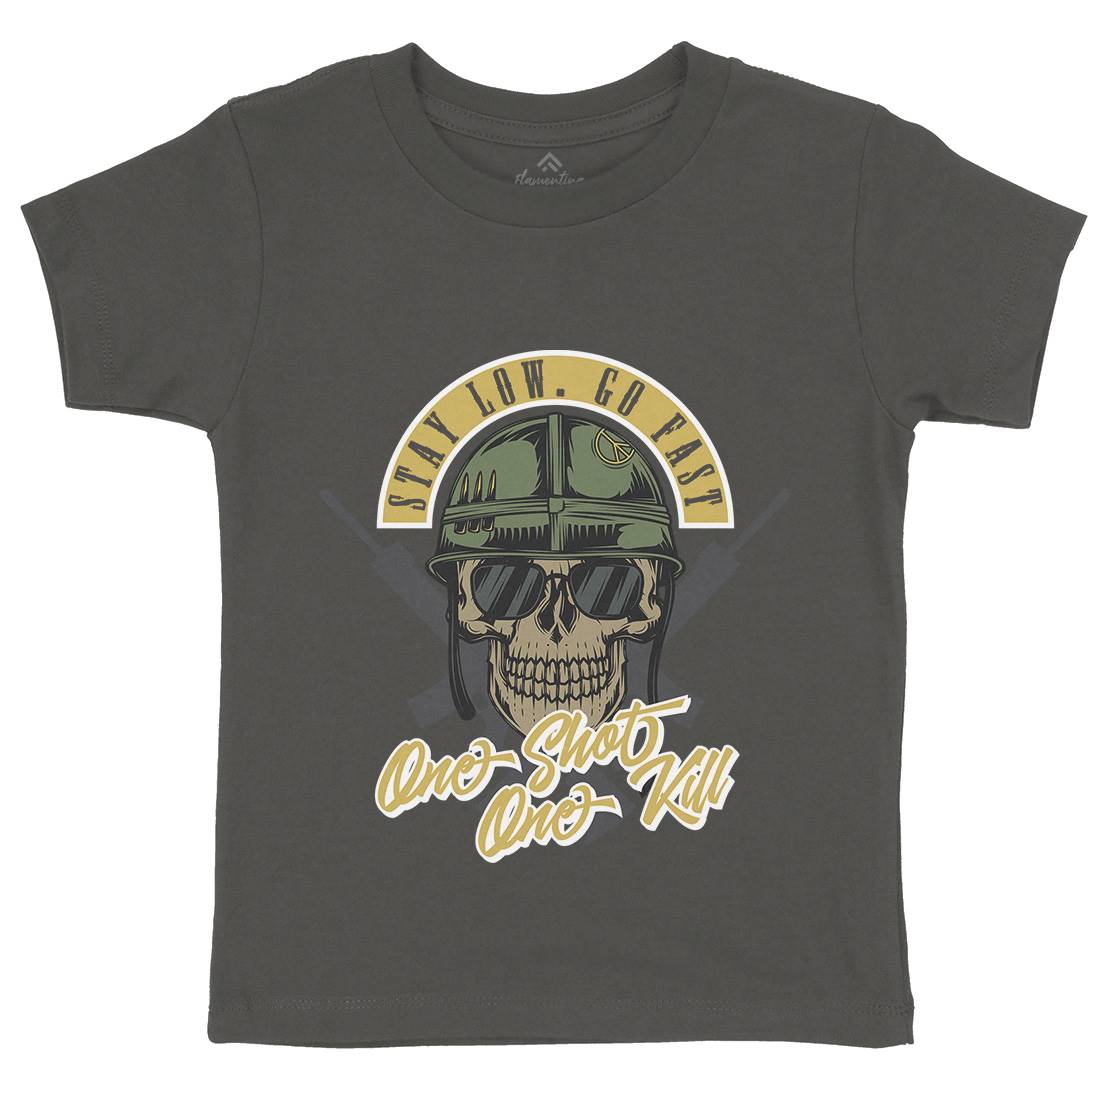 One Shoot Kids Crew Neck T-Shirt Army C885